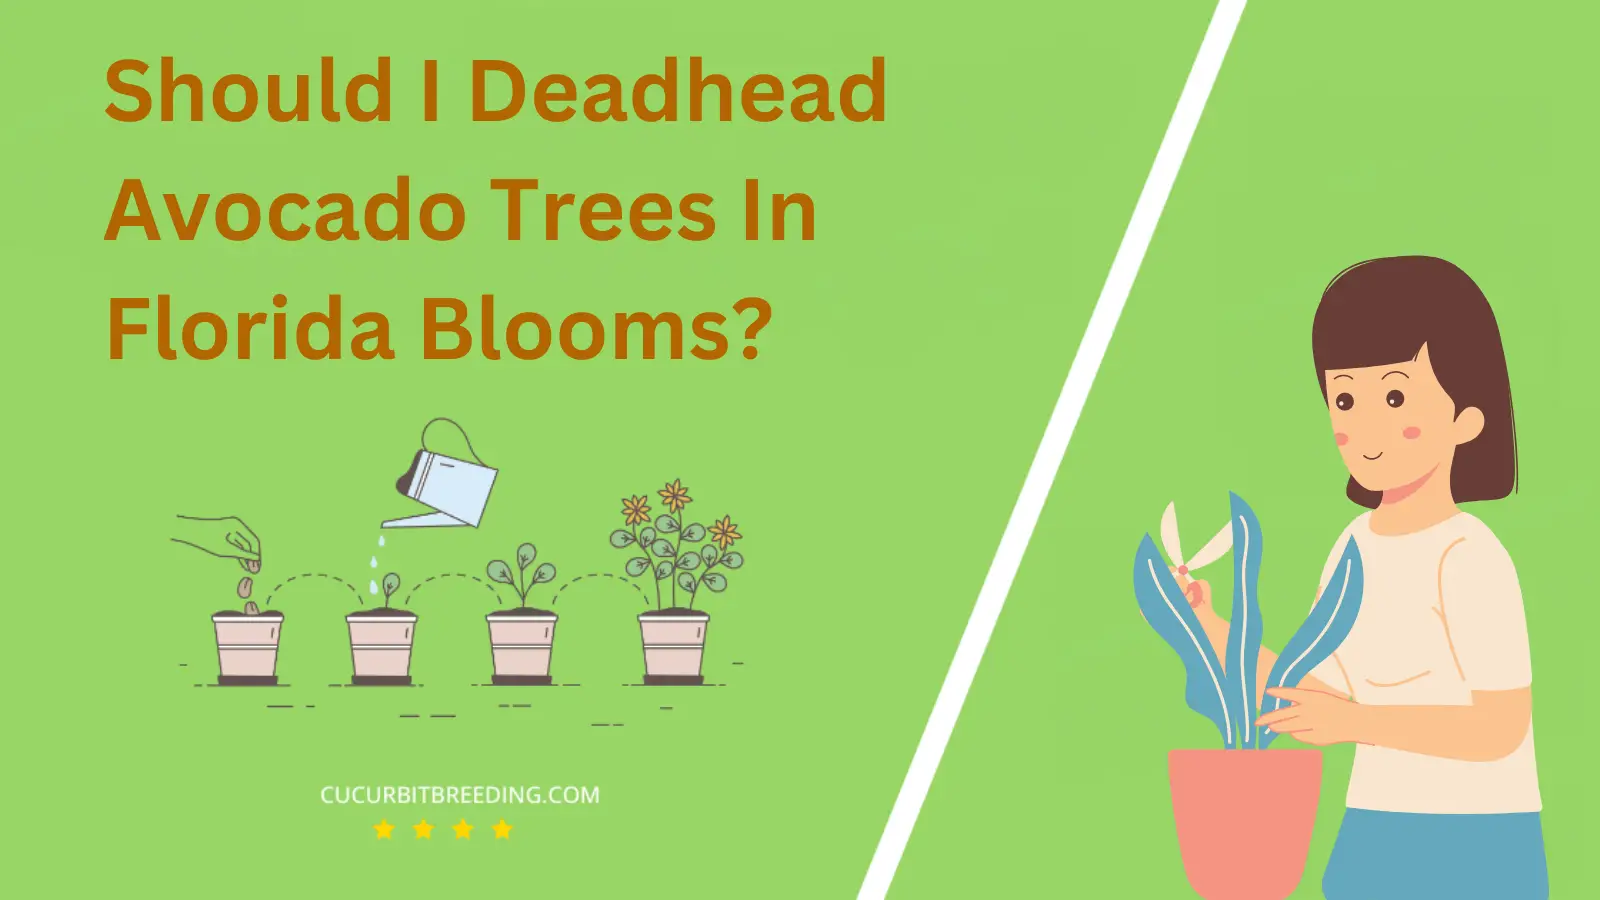 Should I Deadhead Avocado Trees In Florida Blooms?